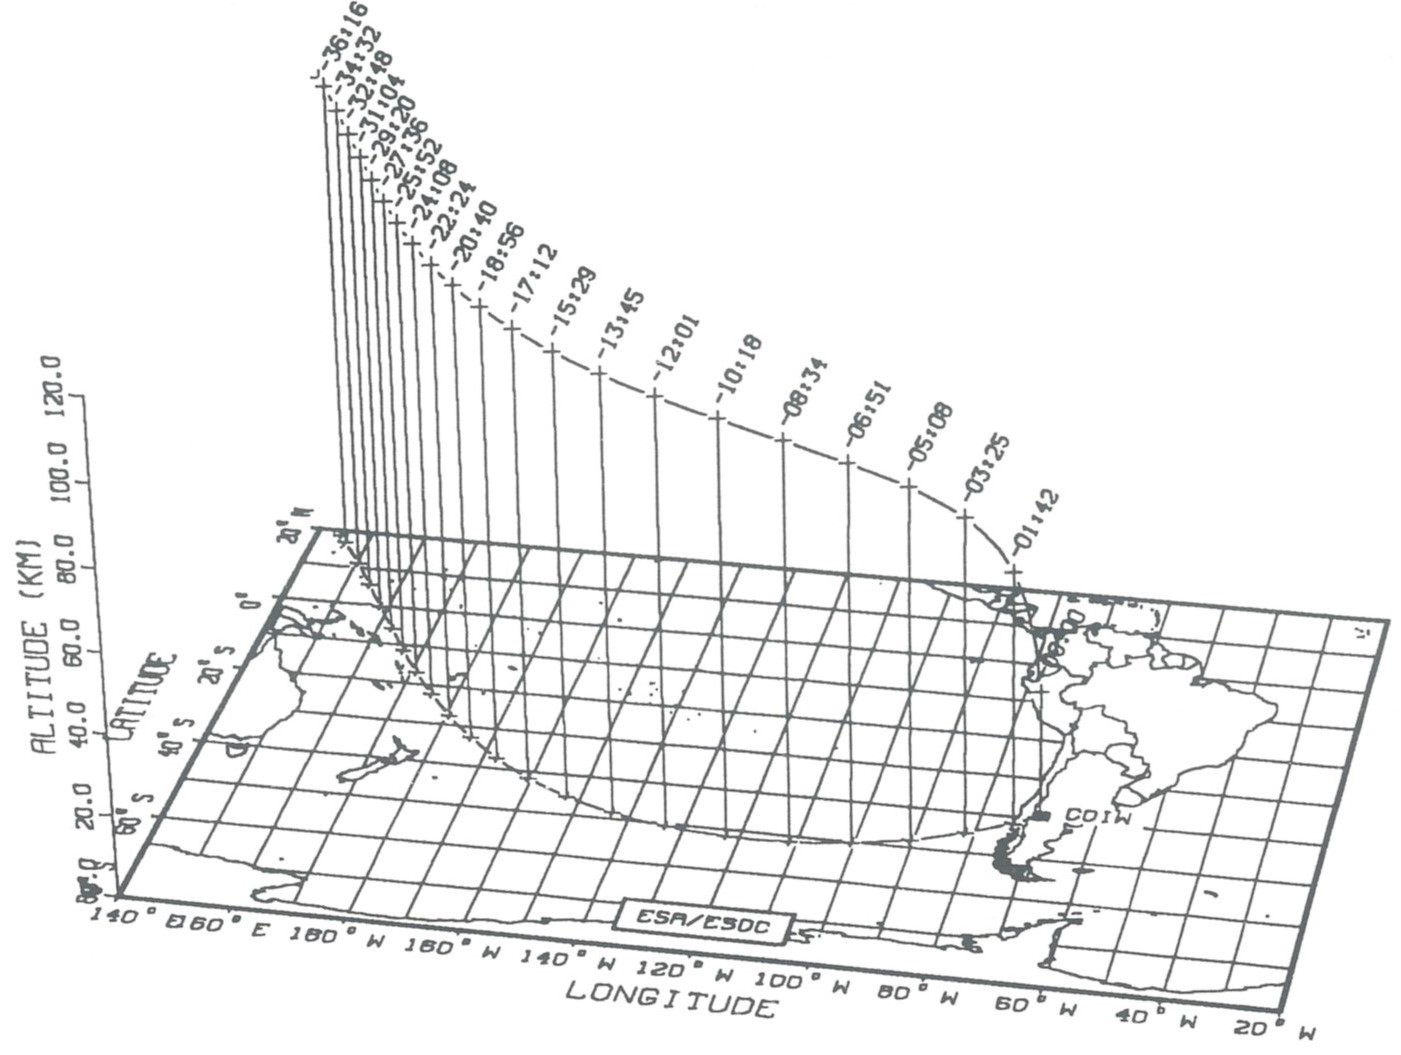 Reentry trajectory of the Salyut 7-Kosmos 1686 complex